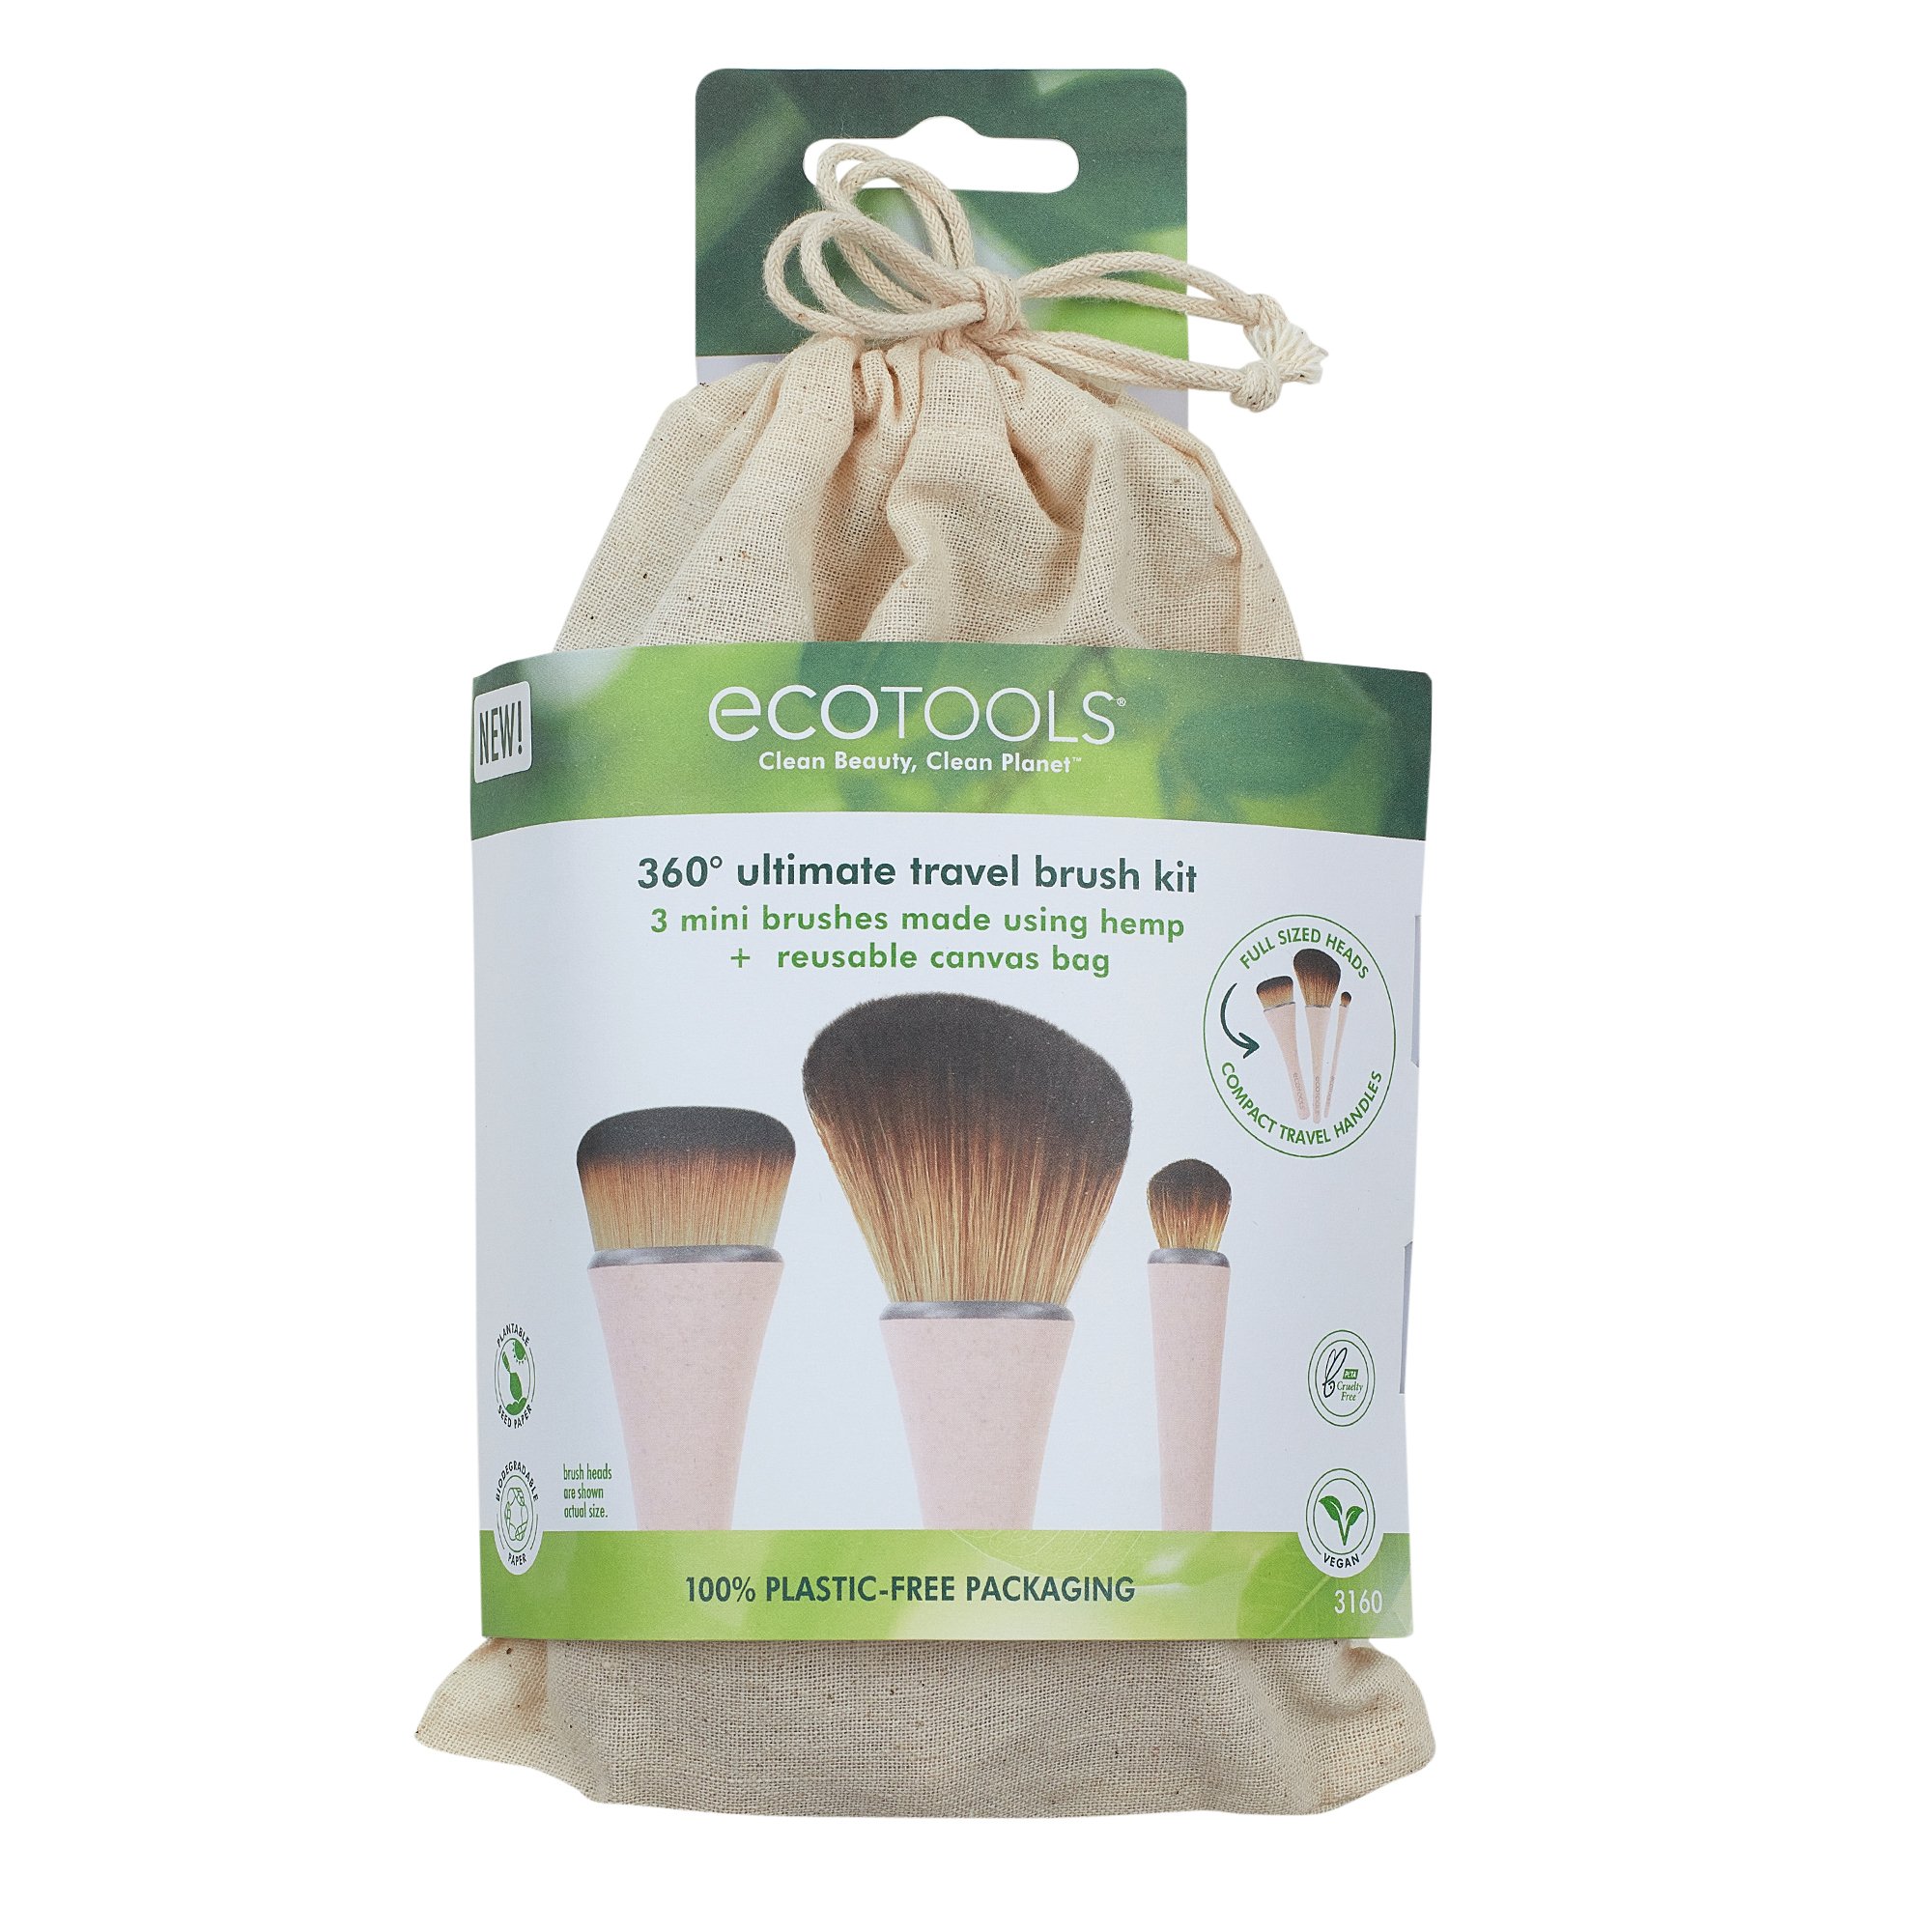 ecotools 360 ultimate travel brush kit